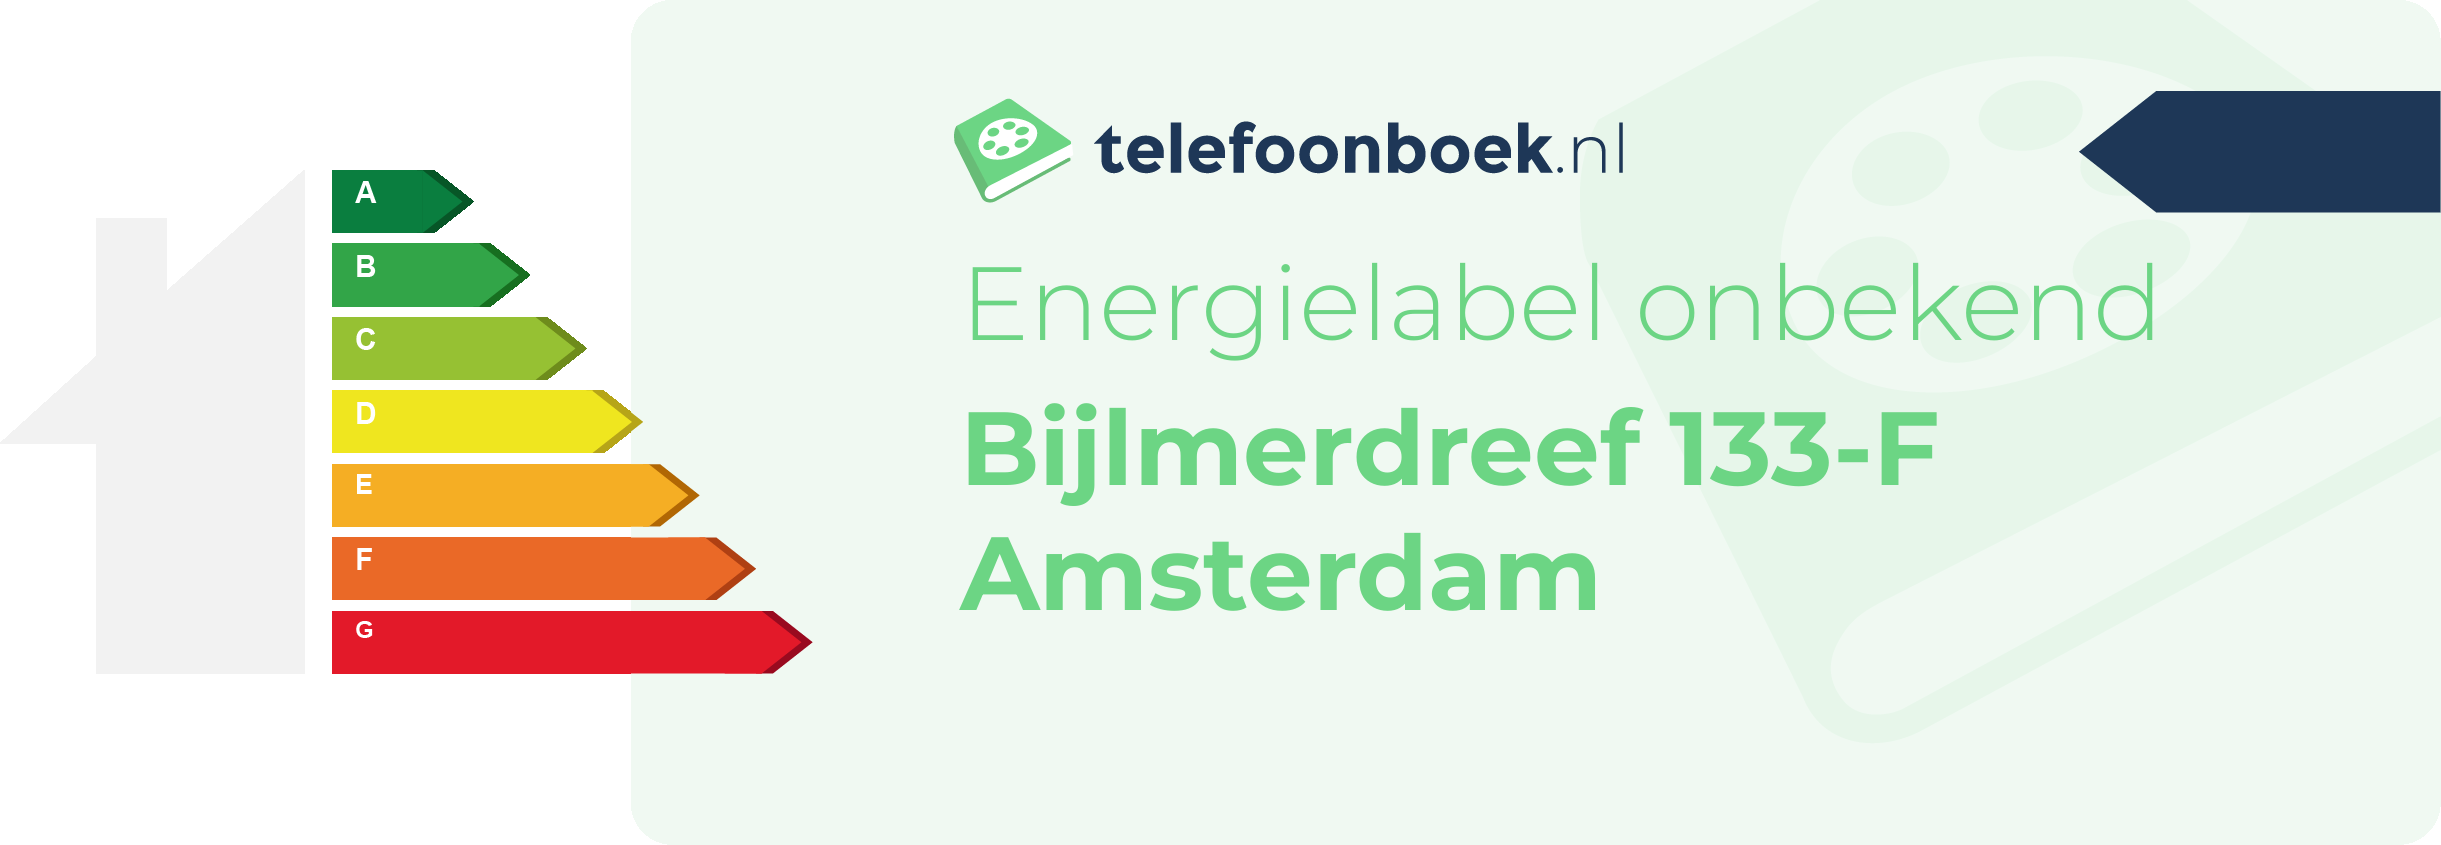 Energielabel Bijlmerdreef 133-F Amsterdam